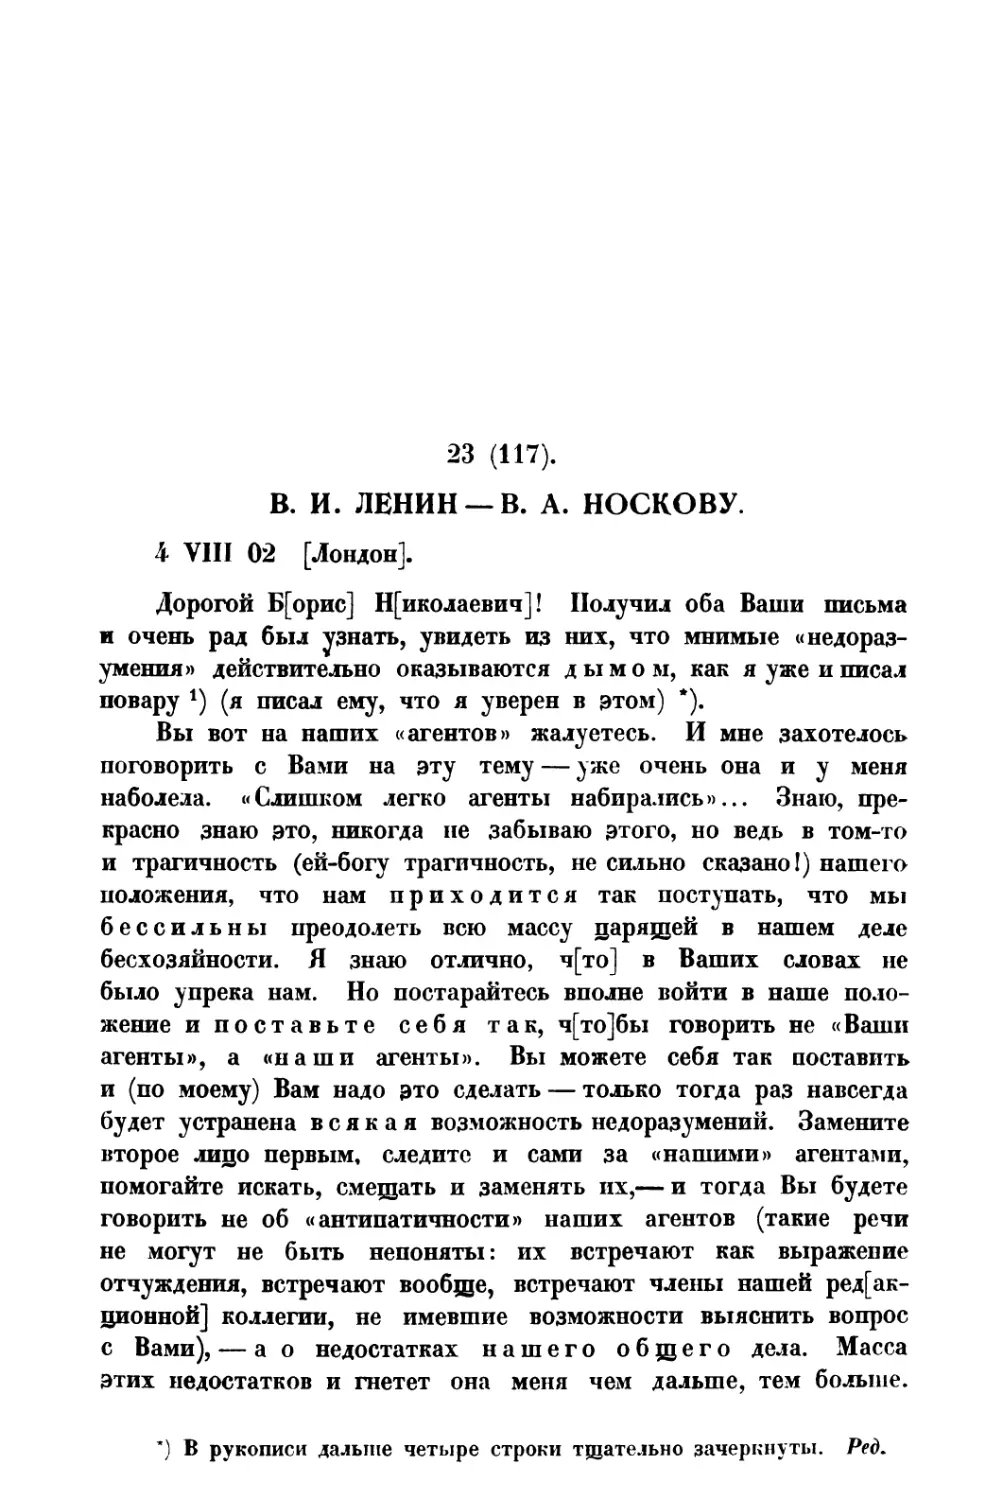 23. В. И. Ленин — В. А. Носкову от 4 VIII 1902 г